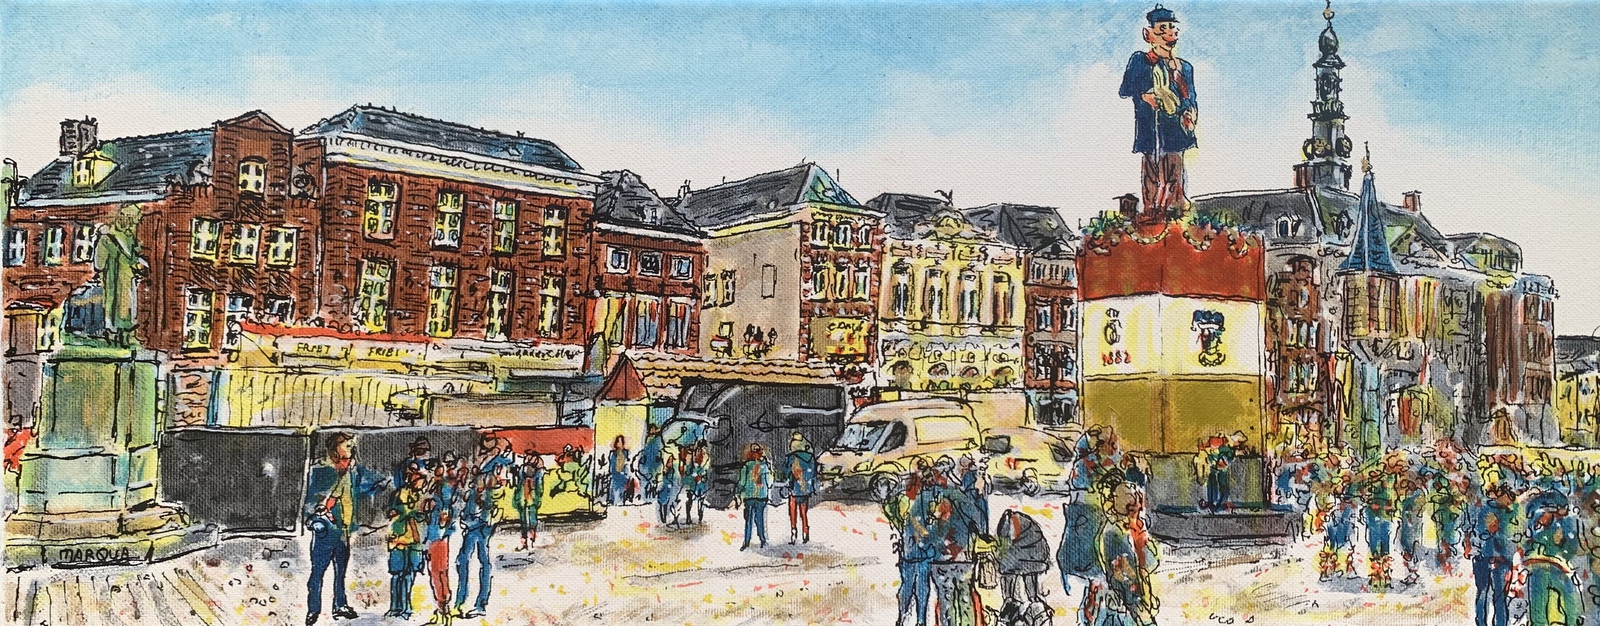 Knillis, Jeroen Bosch, stadhuis op de markt in  Oeteldonk MARQUA272  